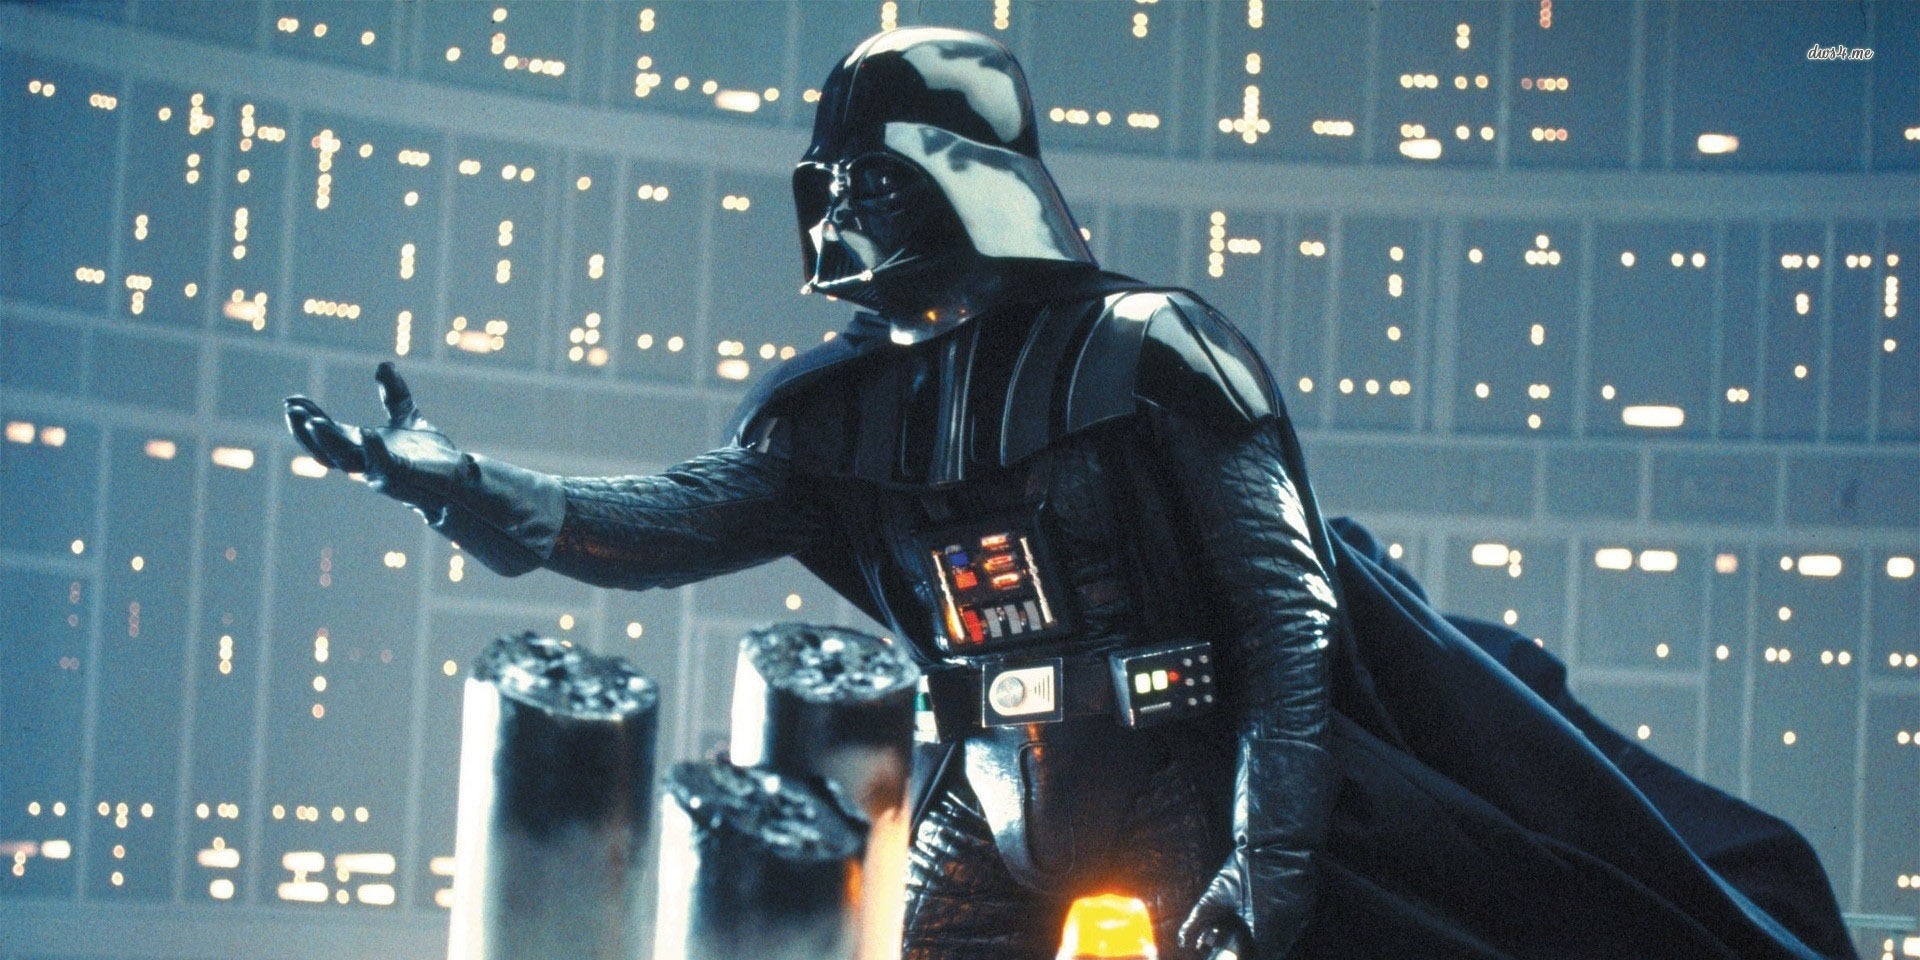 Geldschieter cafetaria Ik wil niet Star Wars Rogue One: Darth Vader confirmed, more details unveiled | The  Independent | The Independent